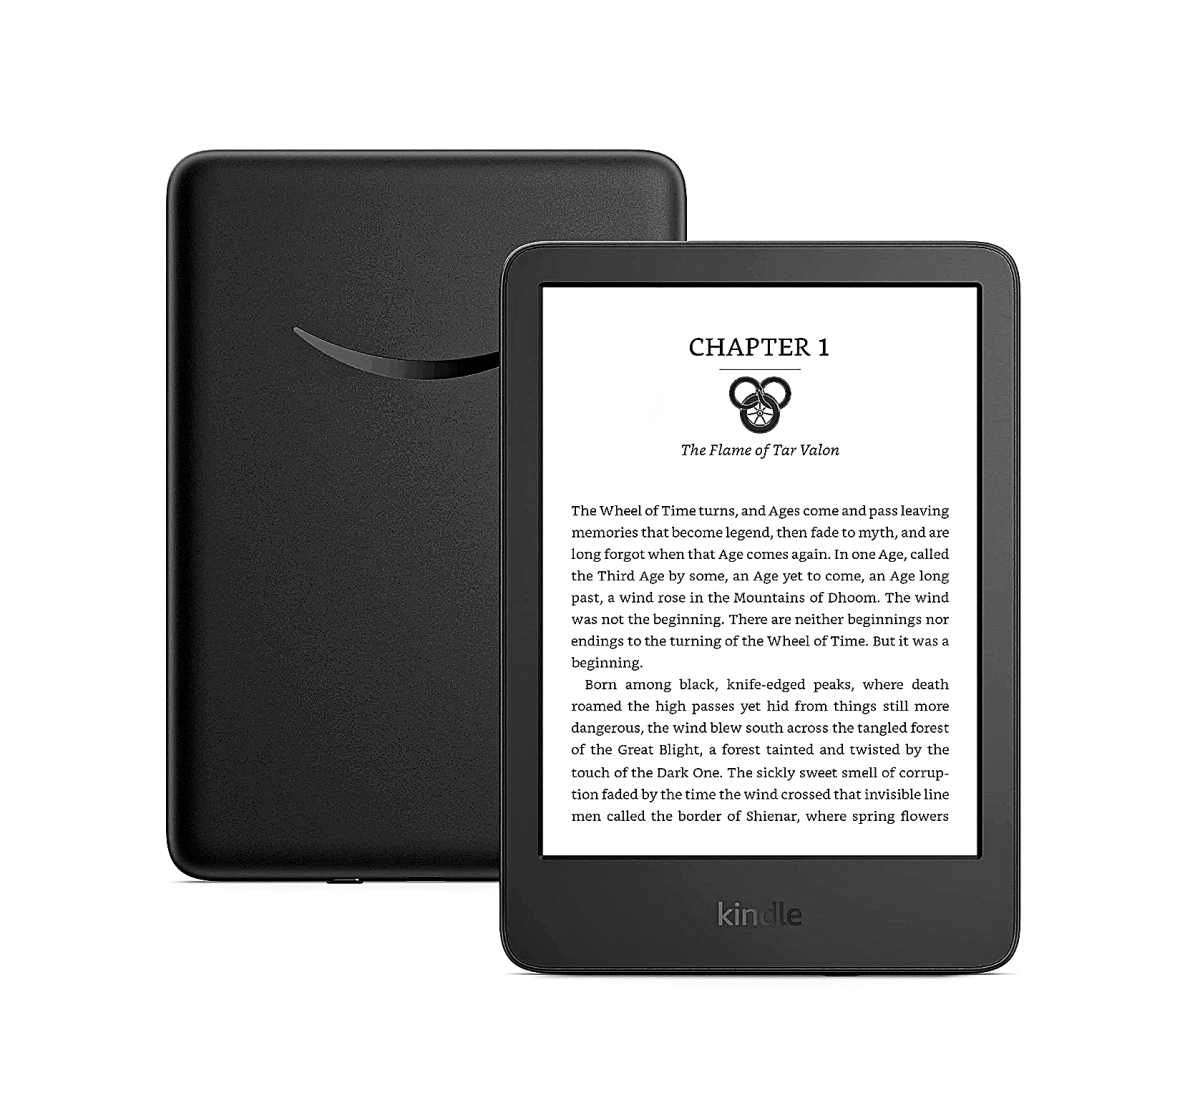 An Amazon Kindle eReader